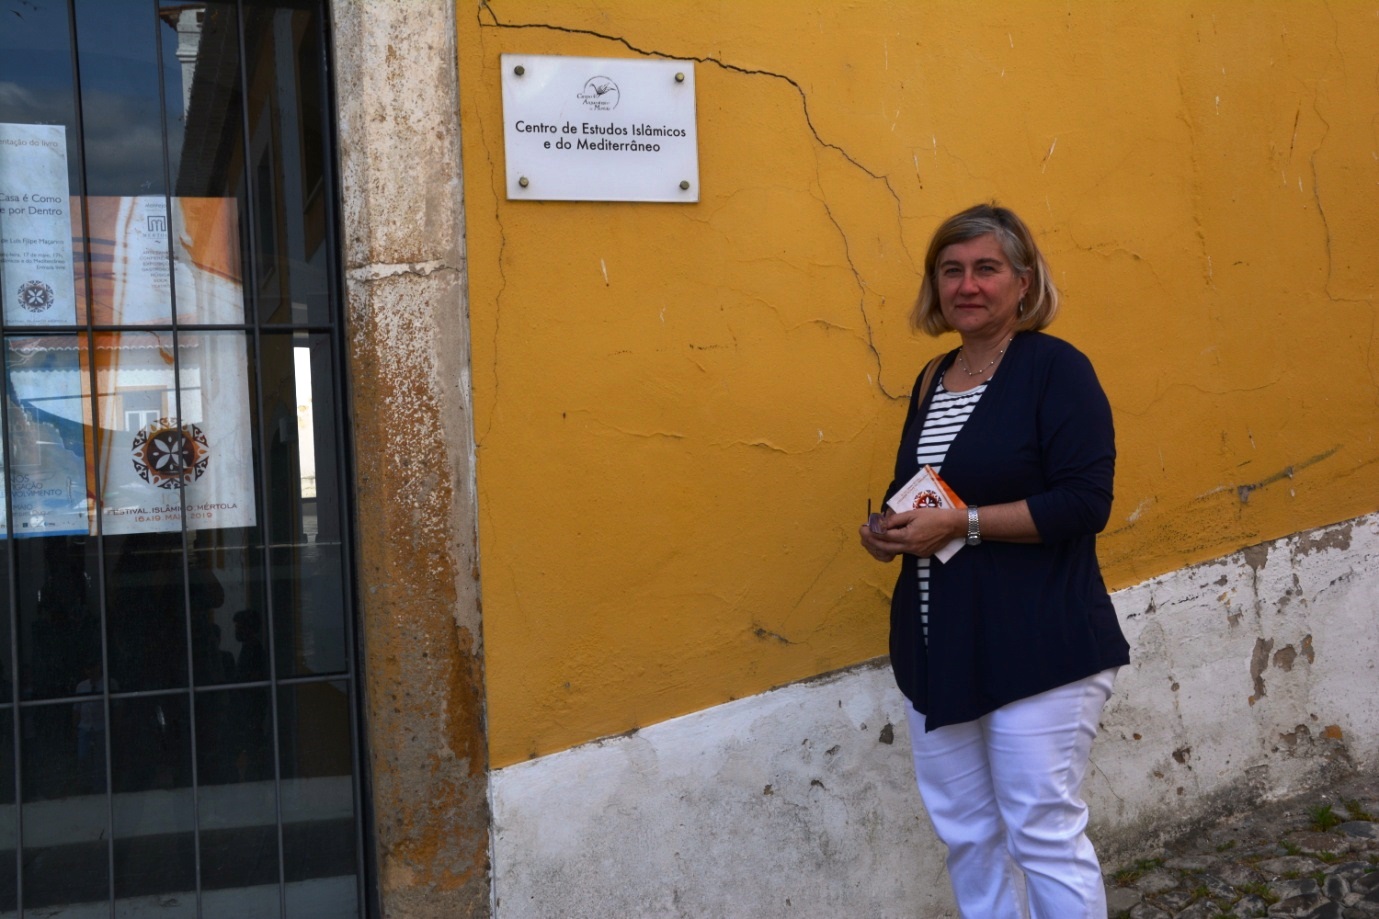 Susana Martínez, professor of Medieval History and Archaeology at the University of Evora (photo: Marta Vidal)